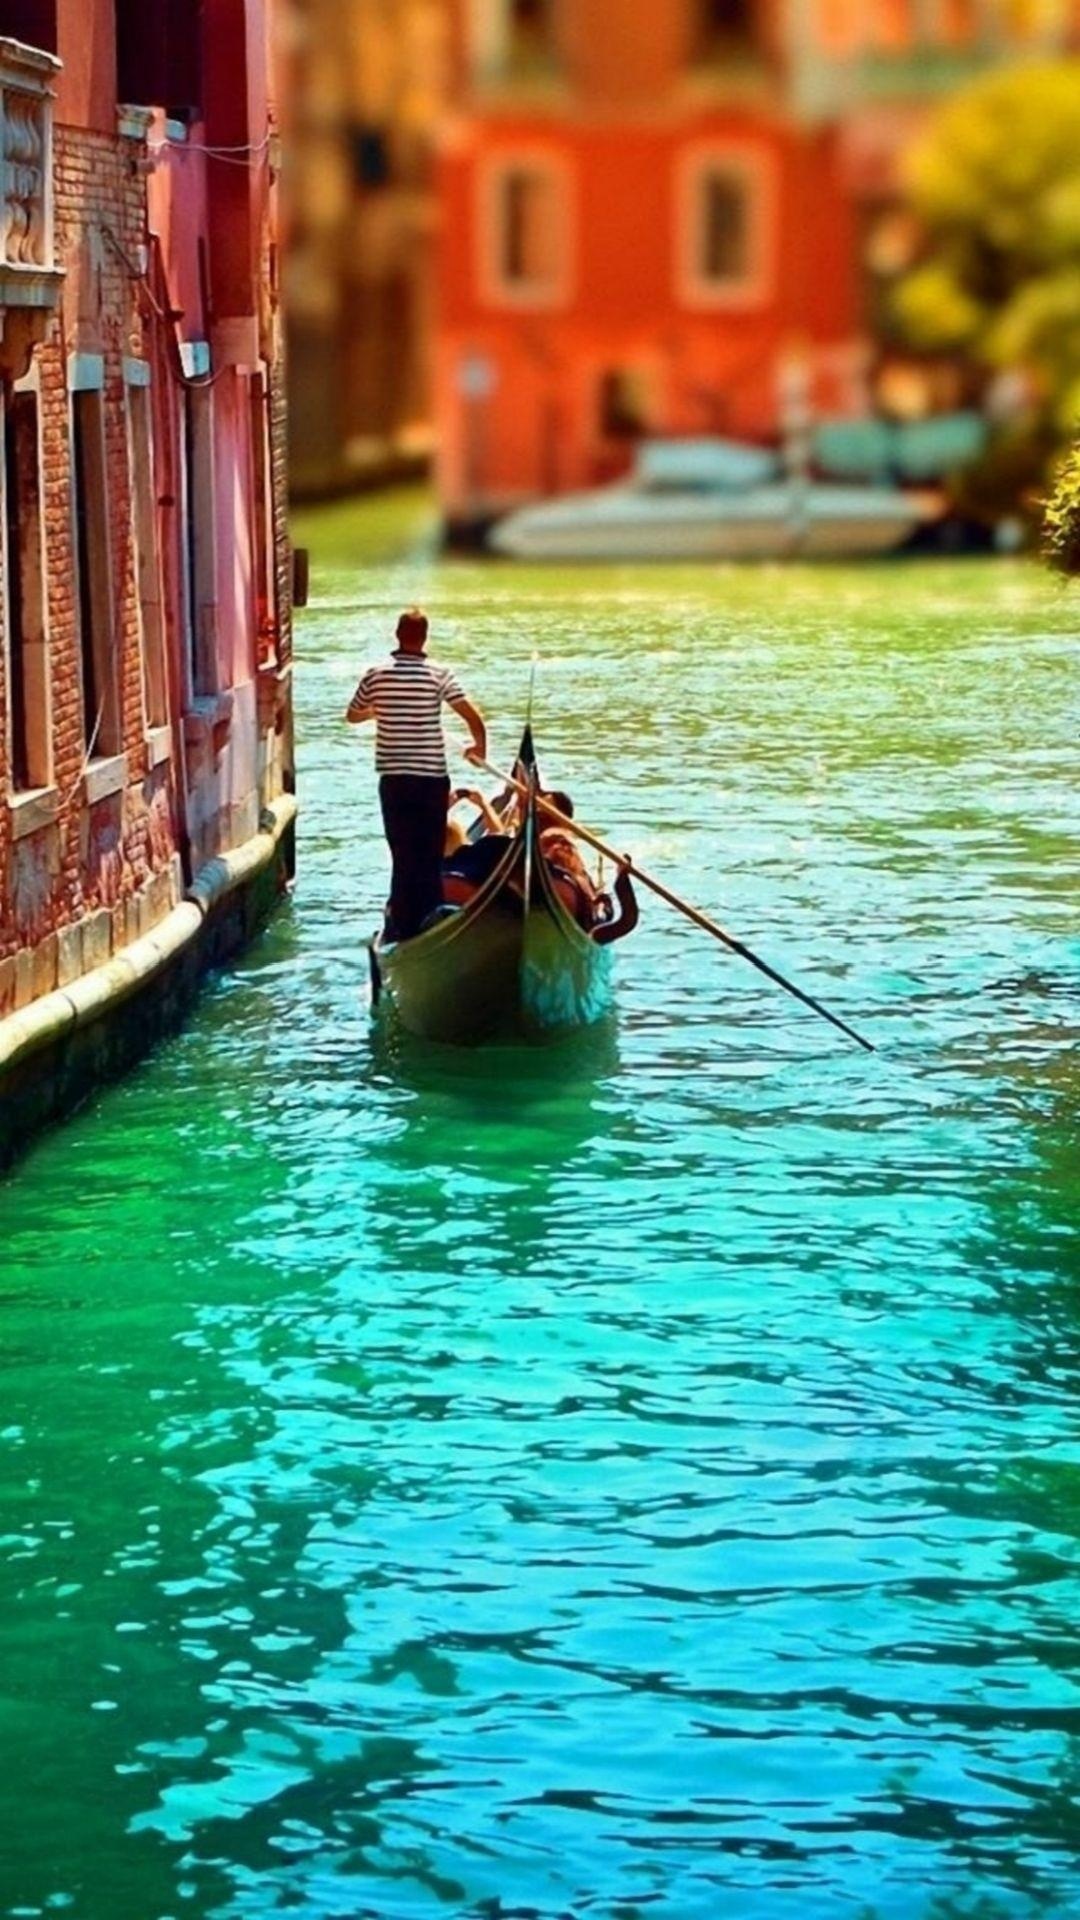 Gondola: A lightweight narrow barge propelled with a single oar, Venice. 1080x1920 Full HD Wallpaper.